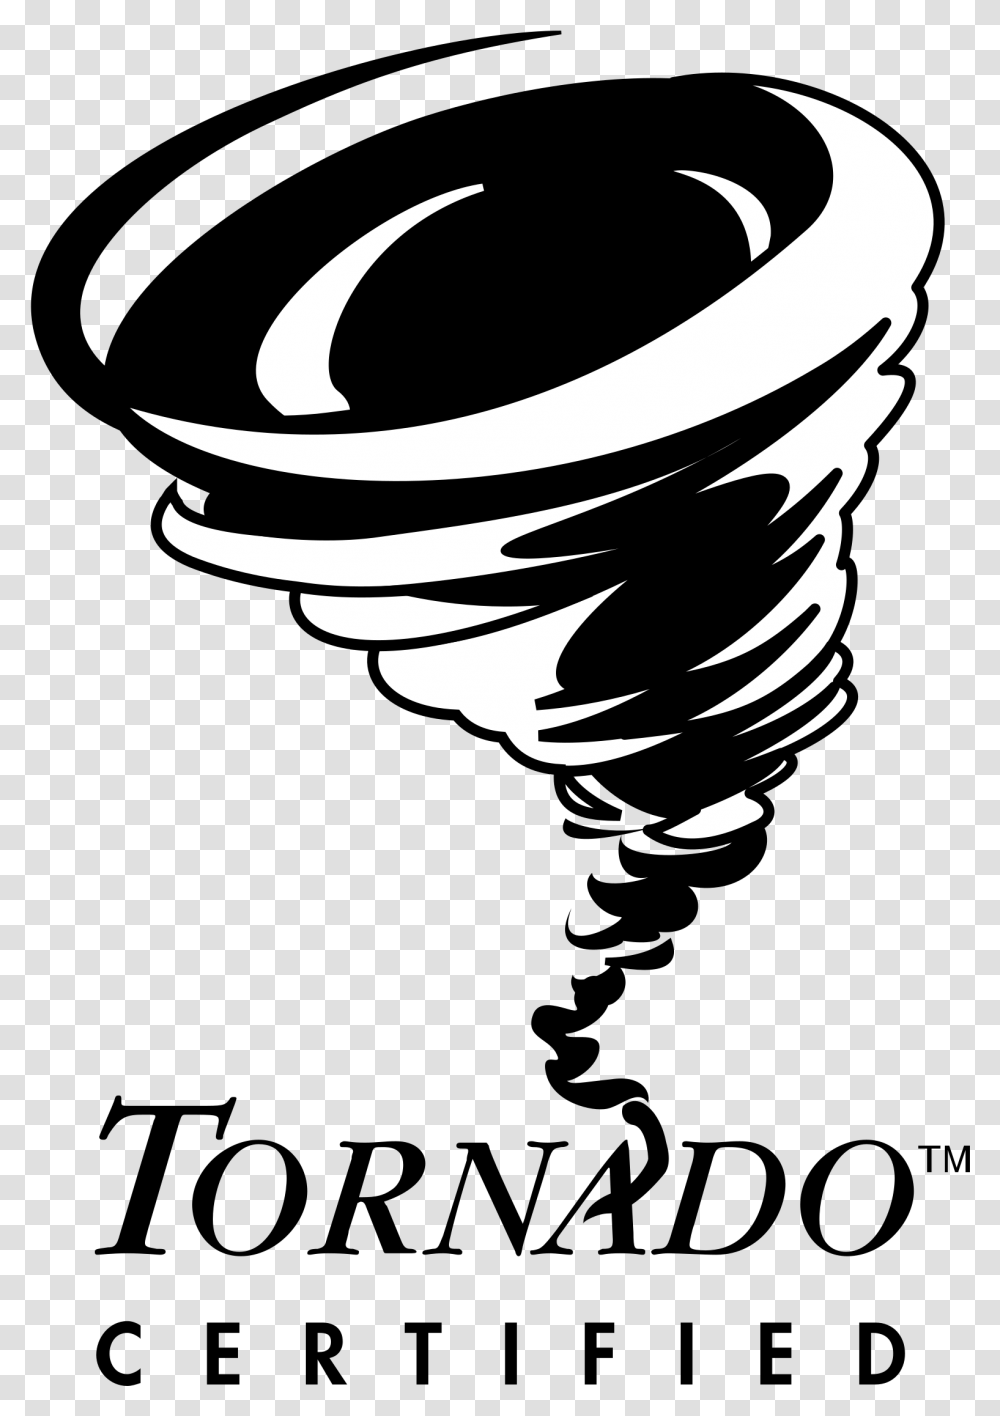 Tornado Certified Logo Free Vector Art Tornado, Stencil, Silhouette, Pillow, Cushion Transparent Png